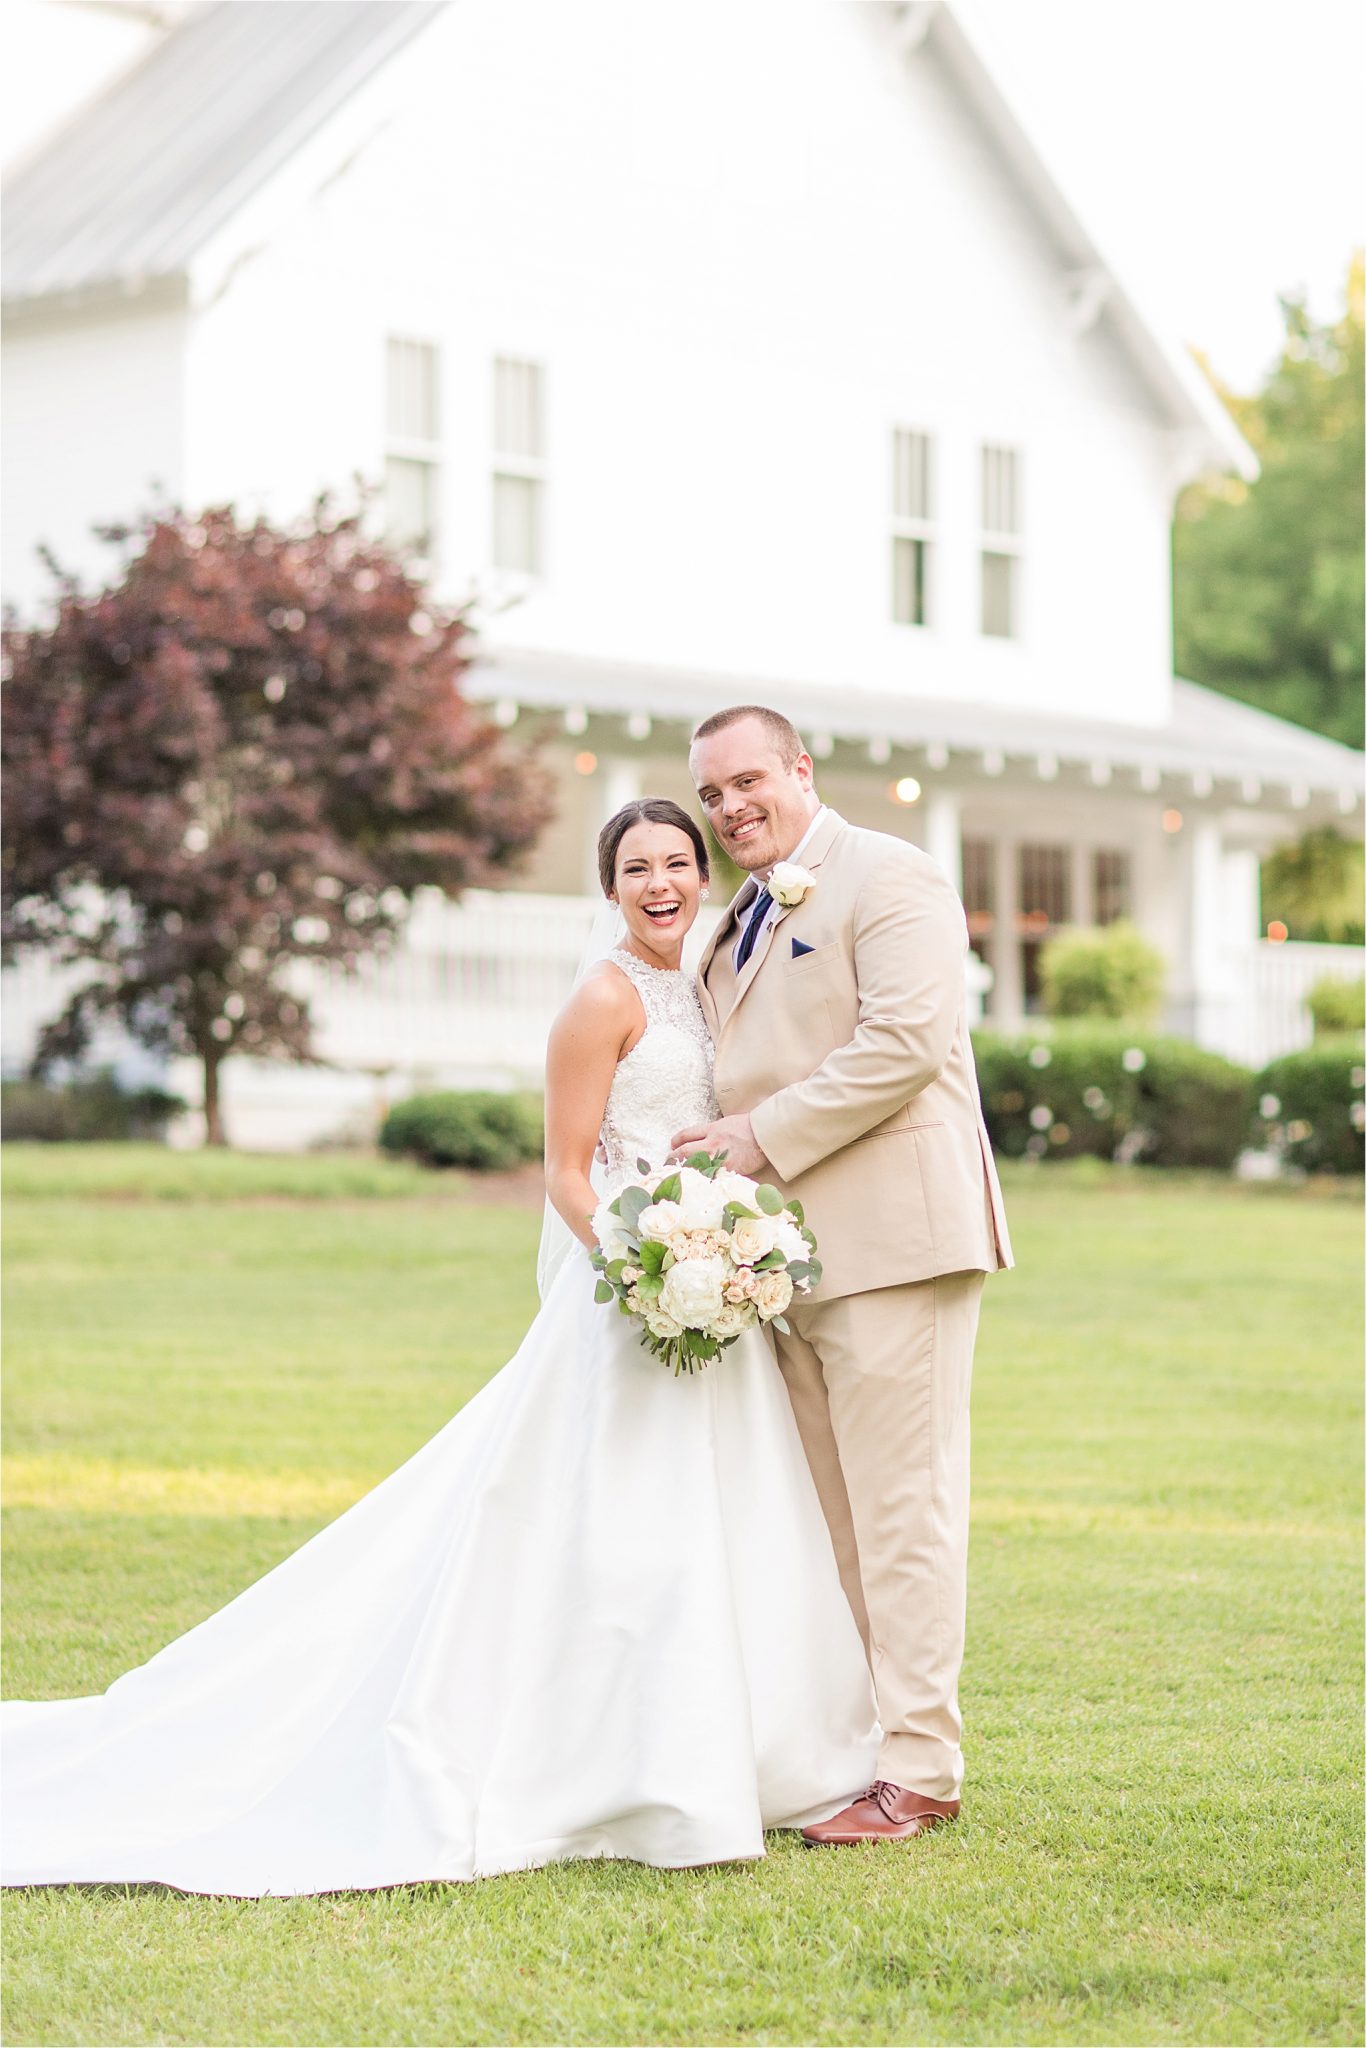 Sonnet House, Birmingham Alabama Wedding Photographer, Candid wedding shots 